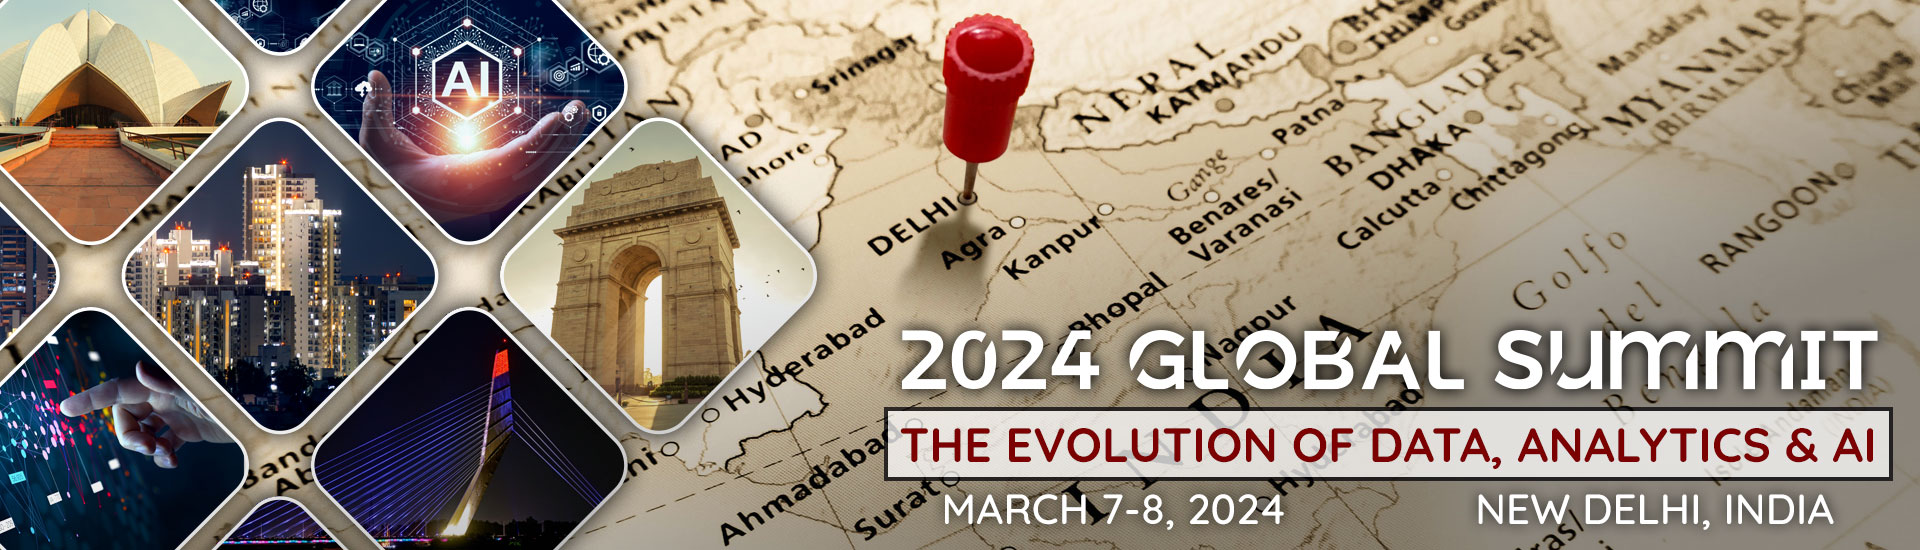 Global Summit • New Delhi, India • March 7-8